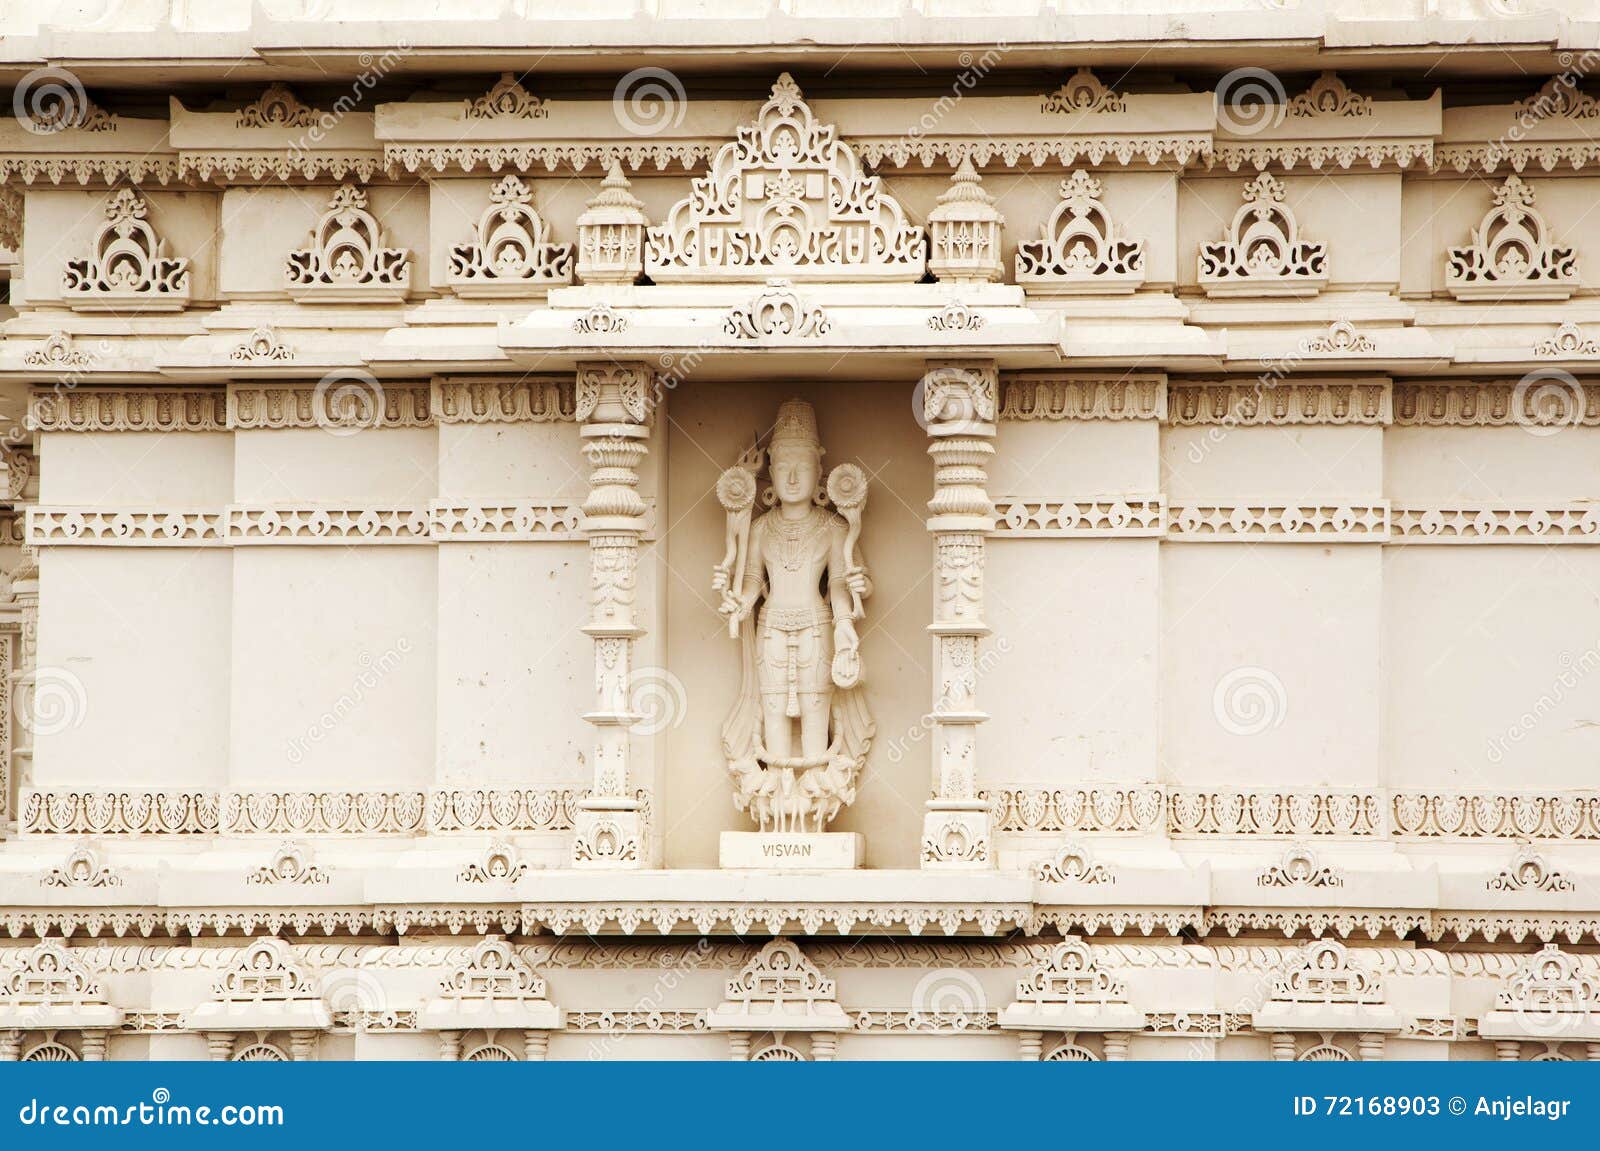 detail of the mandir shri swaminarayan temple in toronto, canada